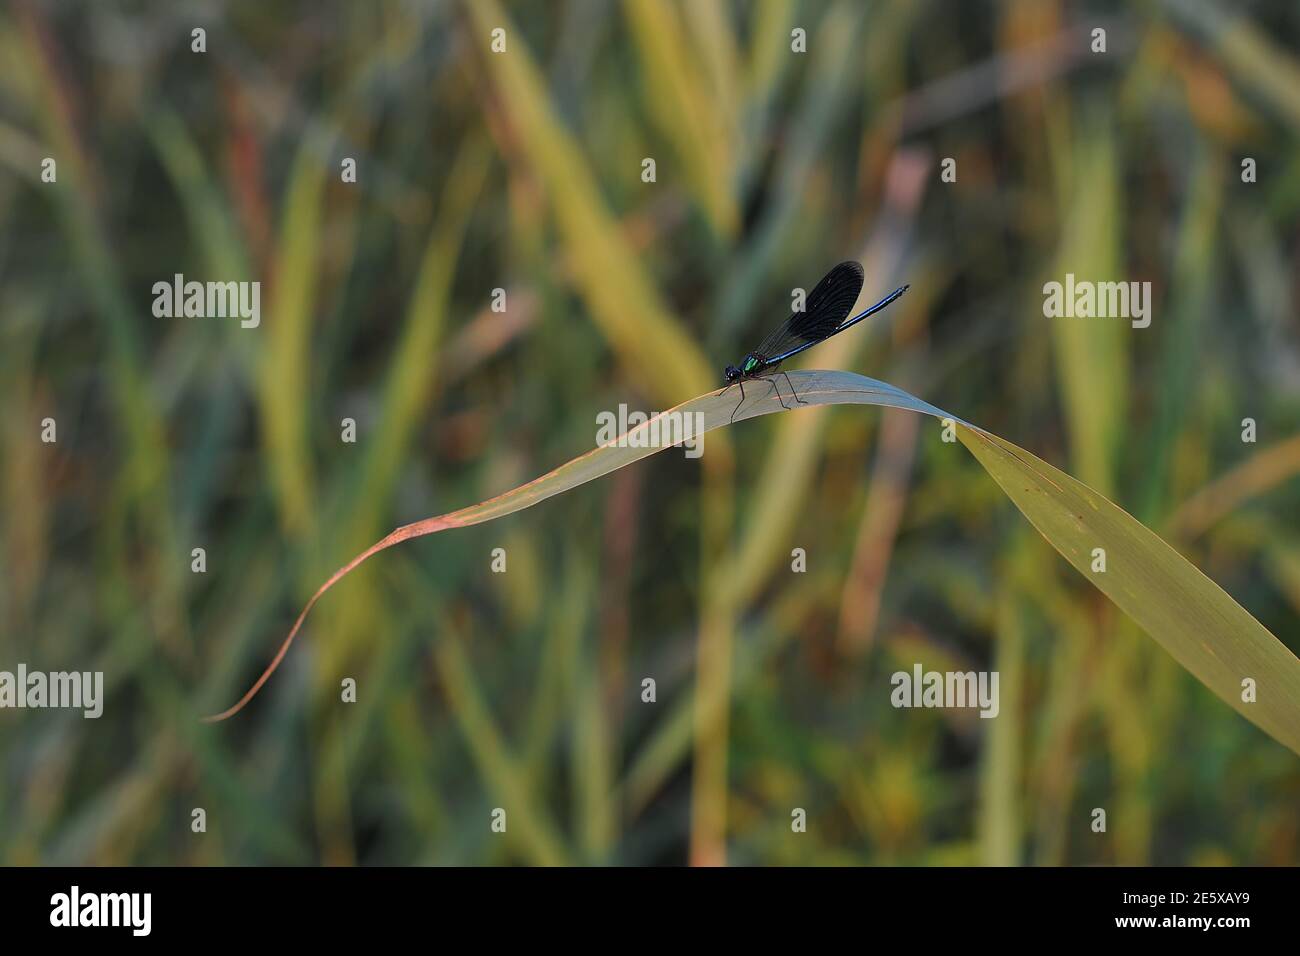 Große blaue Libelle auf einem grünen Grasblatt Stockfoto